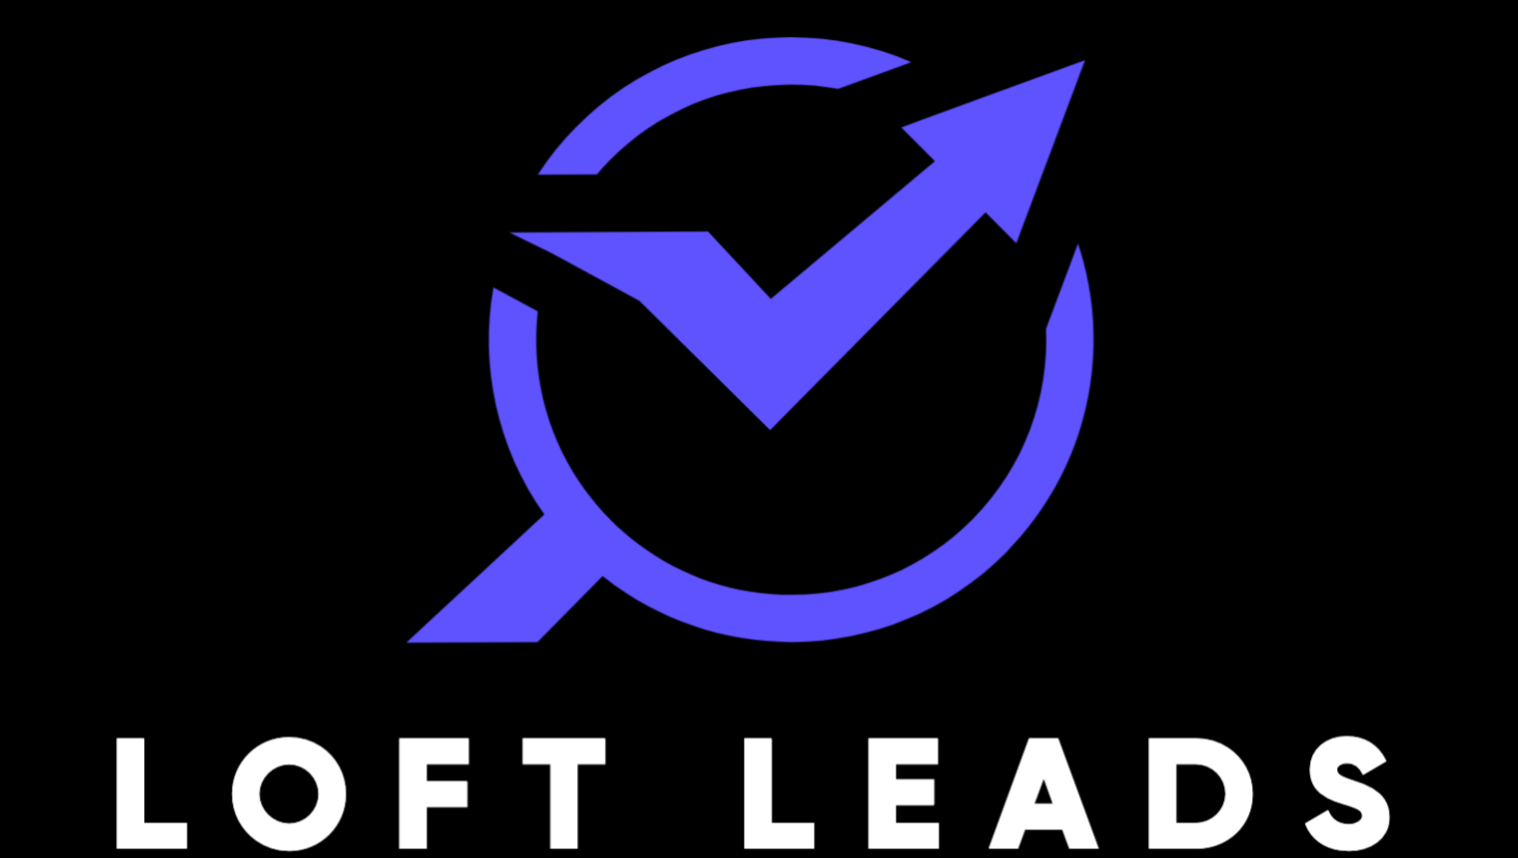 A logo for a company called loft leads